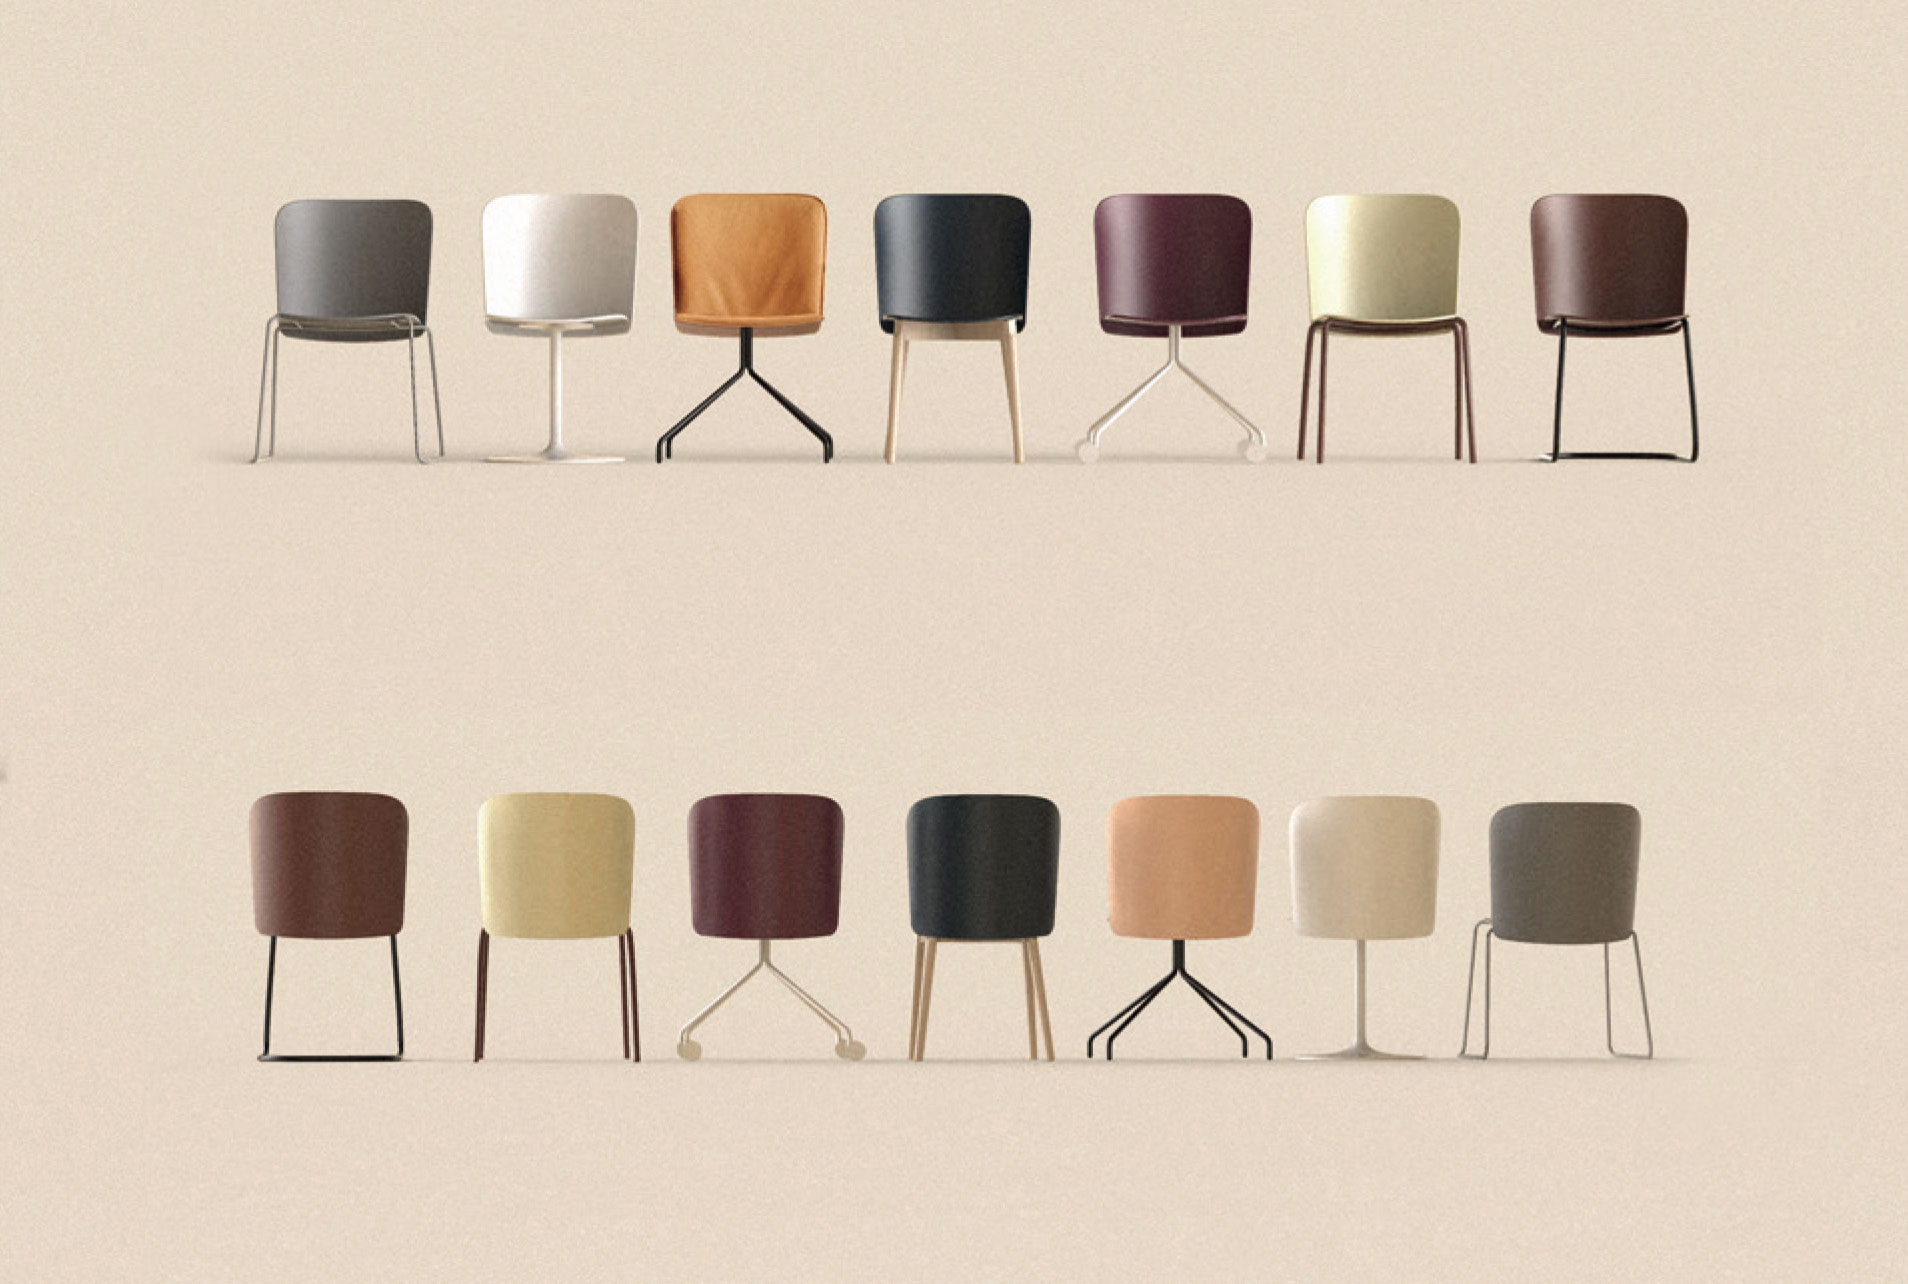 SUPRA chairs designed by Note Design Studio for Ondarreta. Photo: Courtesy of Ondarreta.